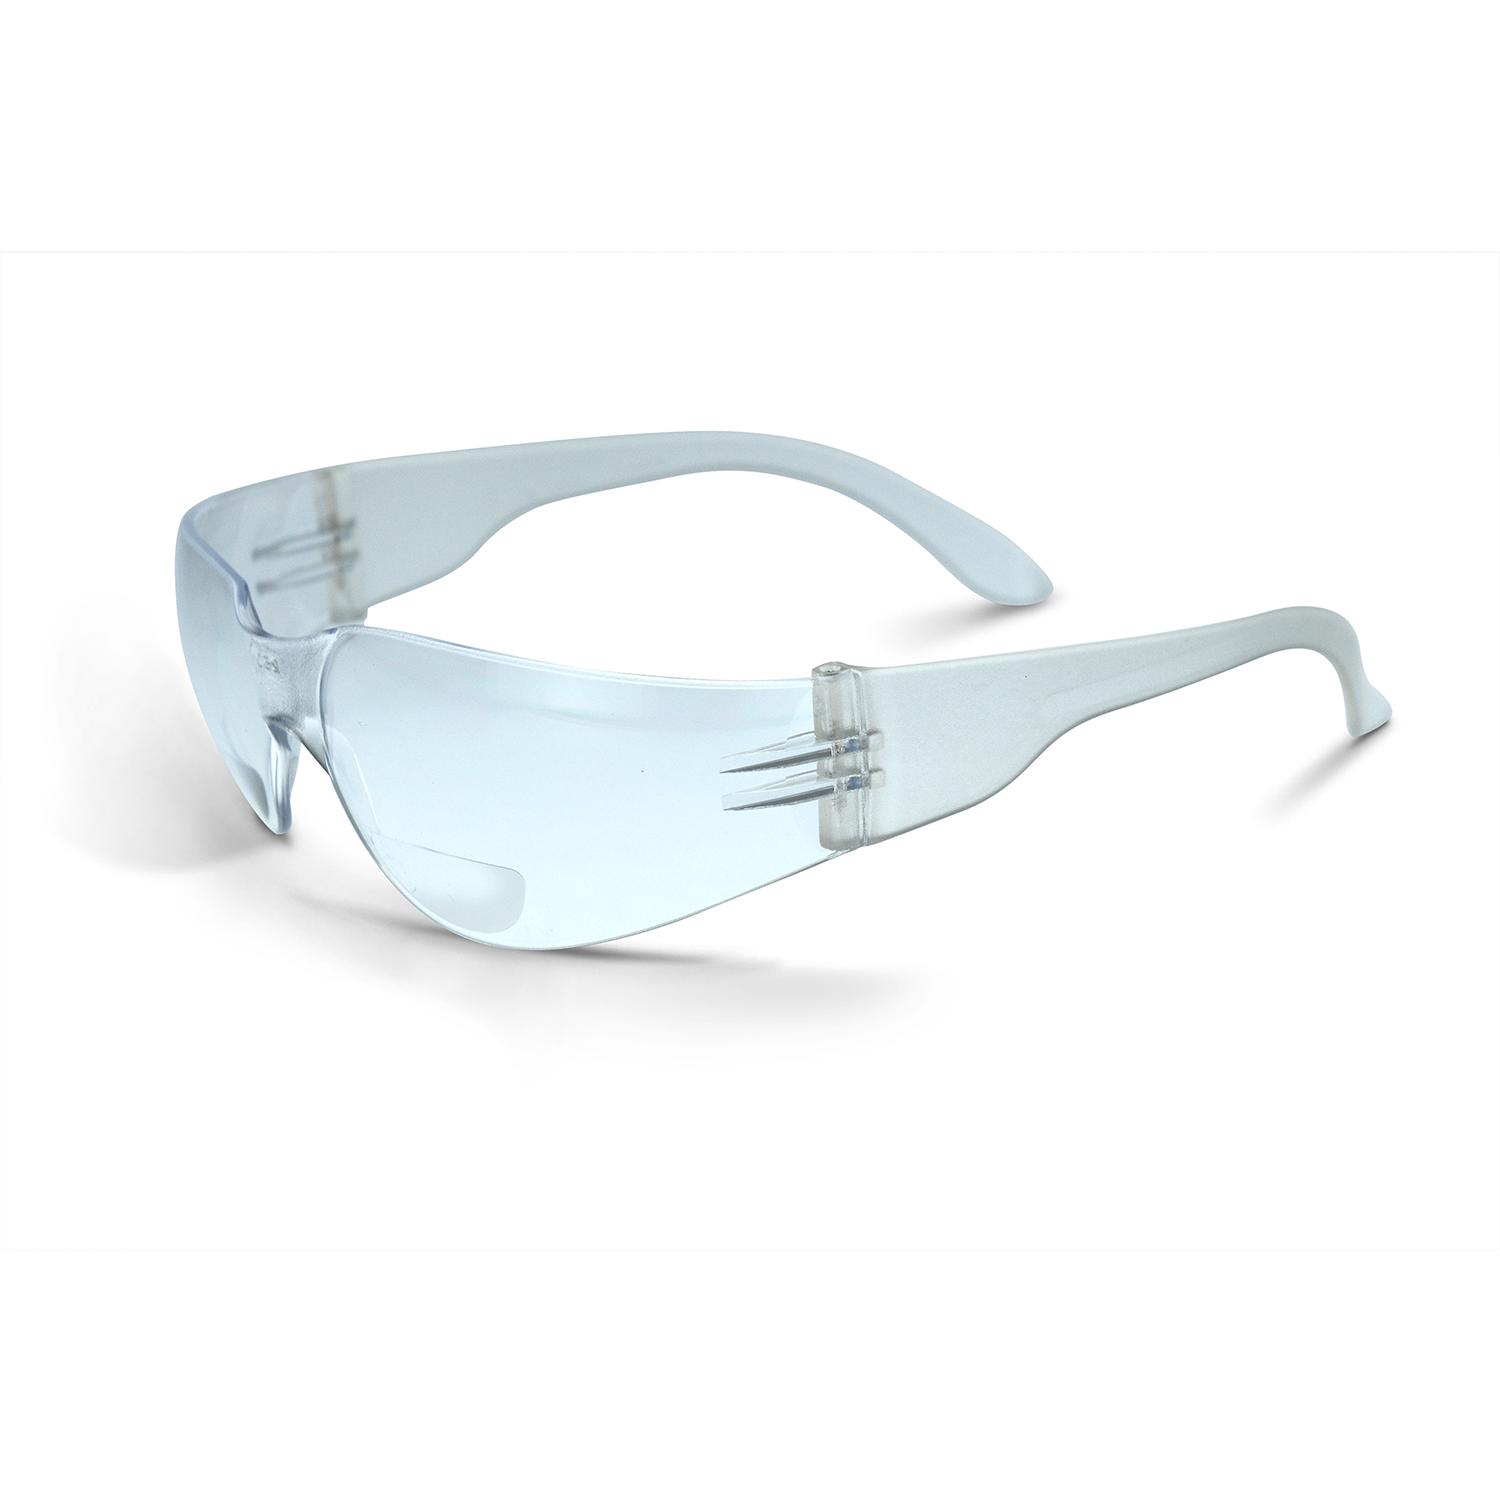 Rad Sequel Bifocal Brown 2.0 Lens Safety Glasses Reading Readers Magnifier Z87+